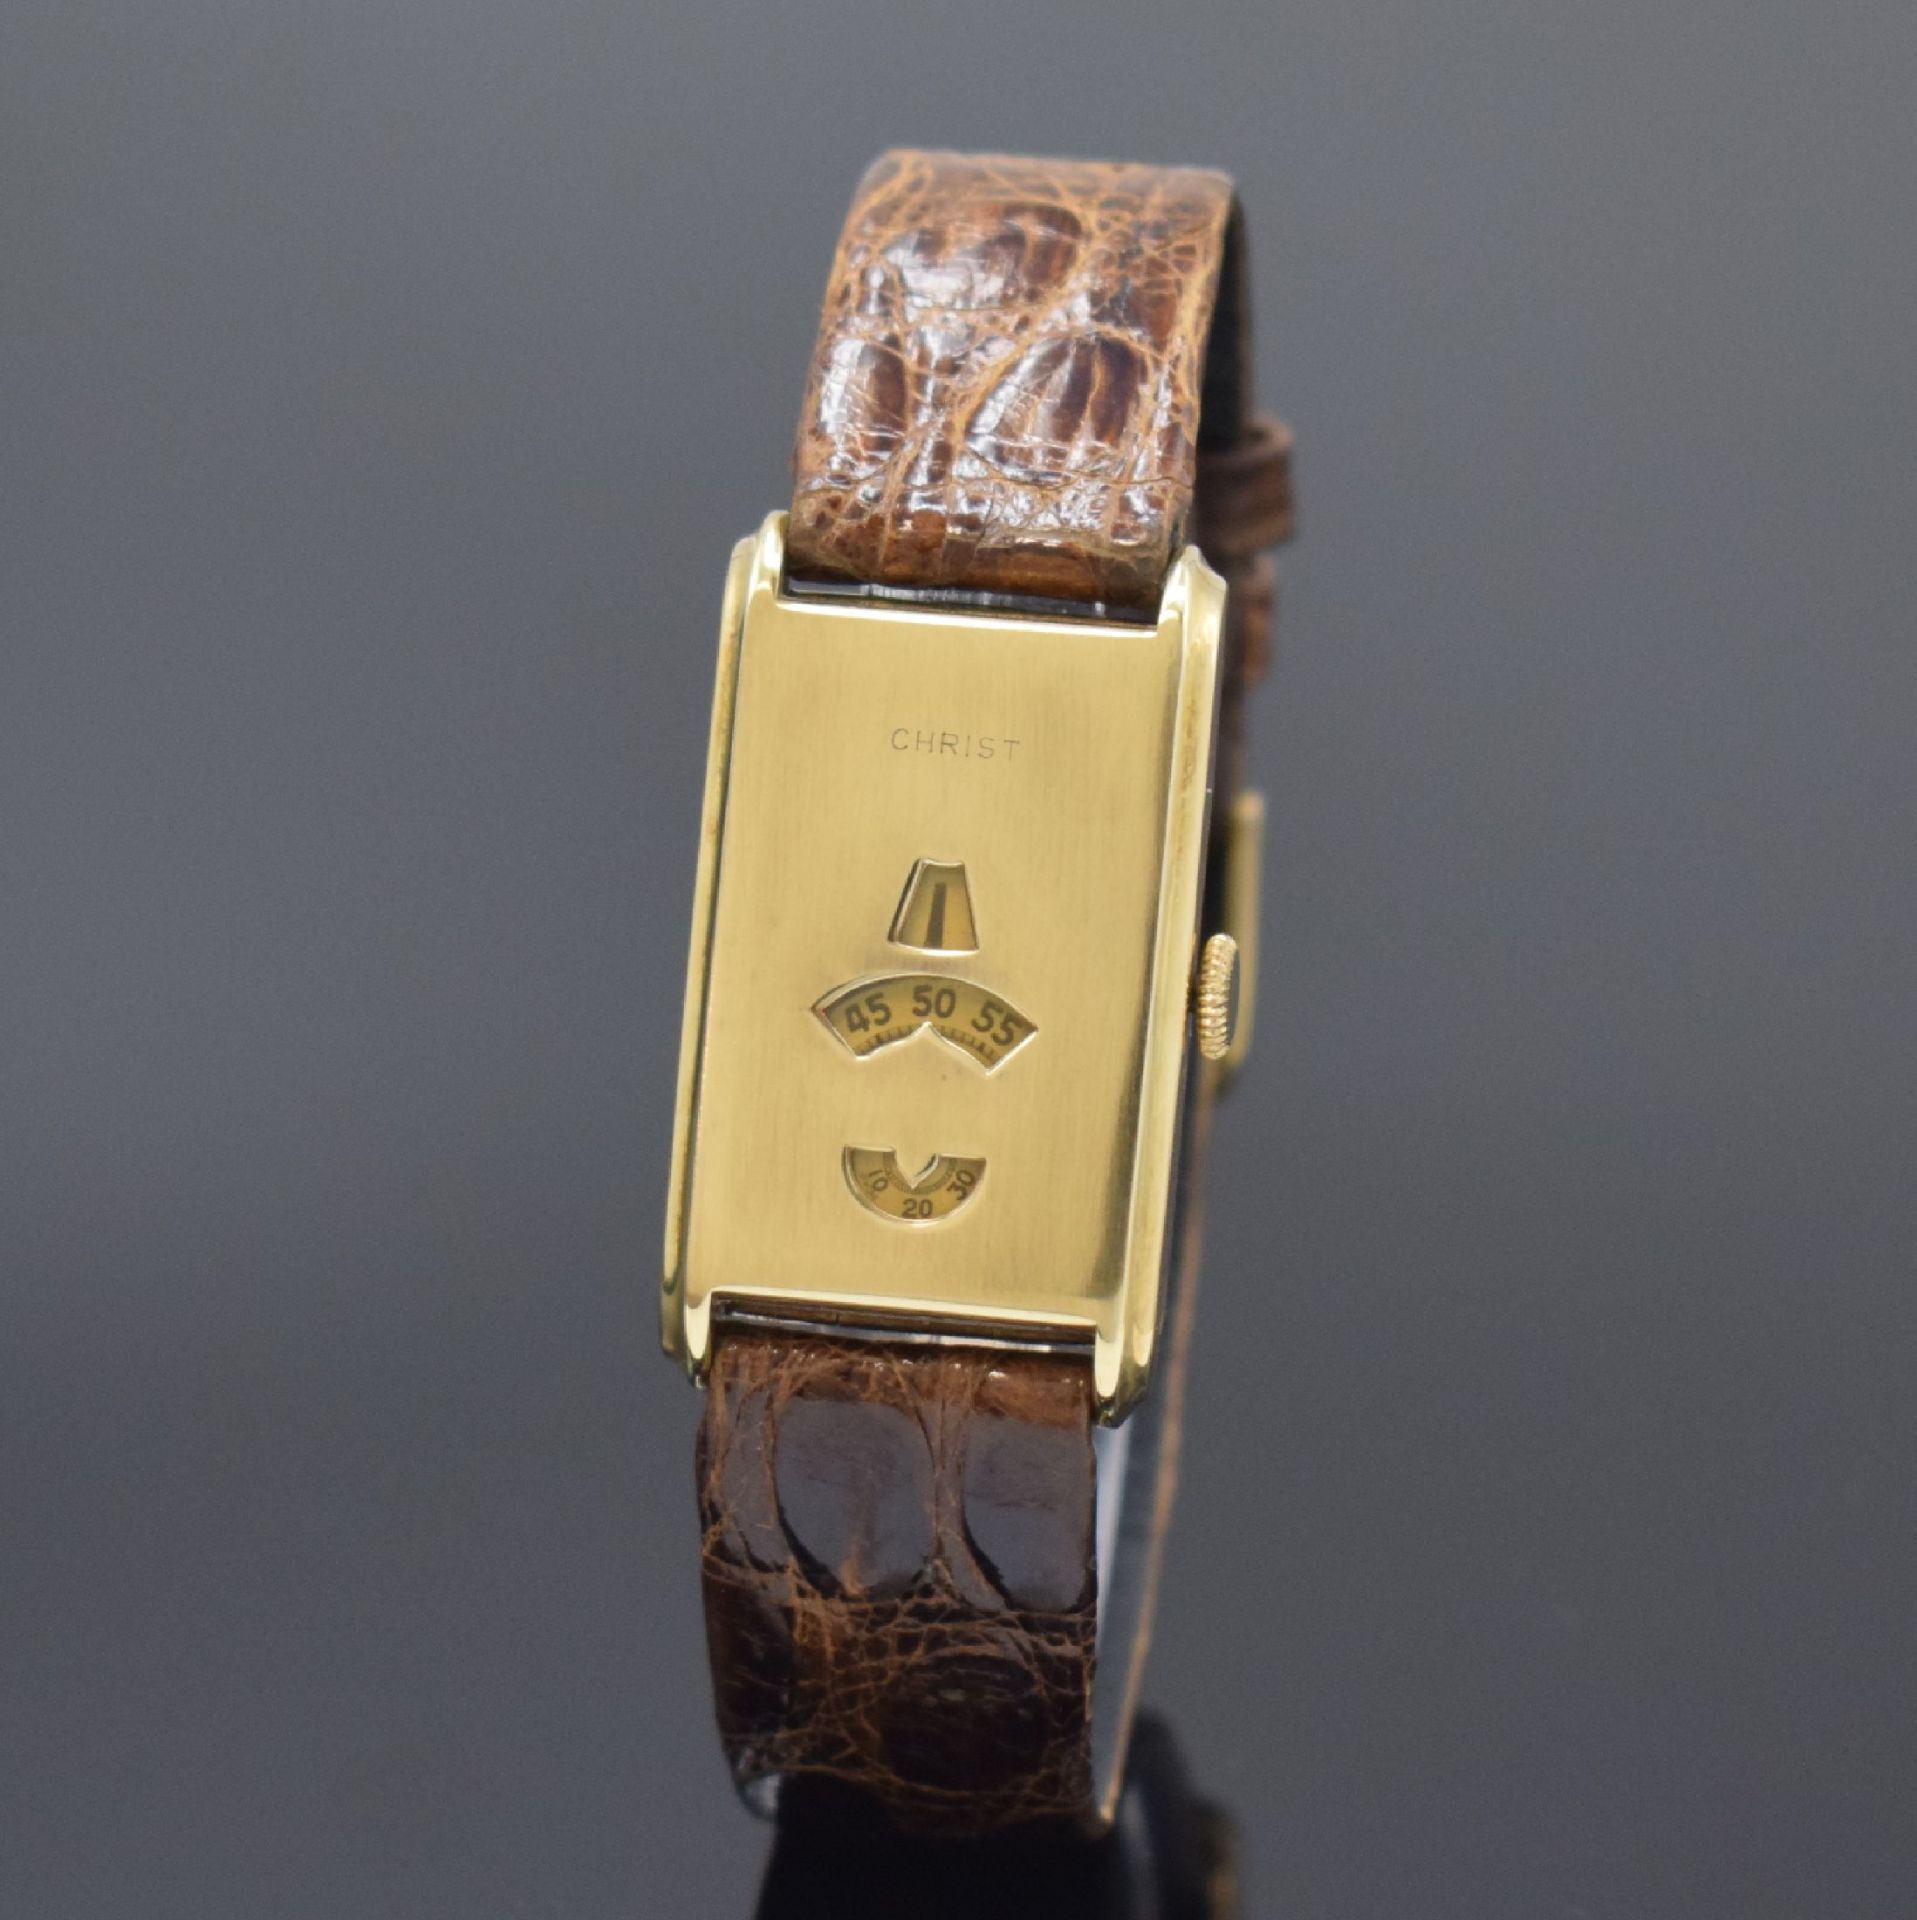 CHRIST seltene digitale Armbanduhr in GG 585/000, Schweiz